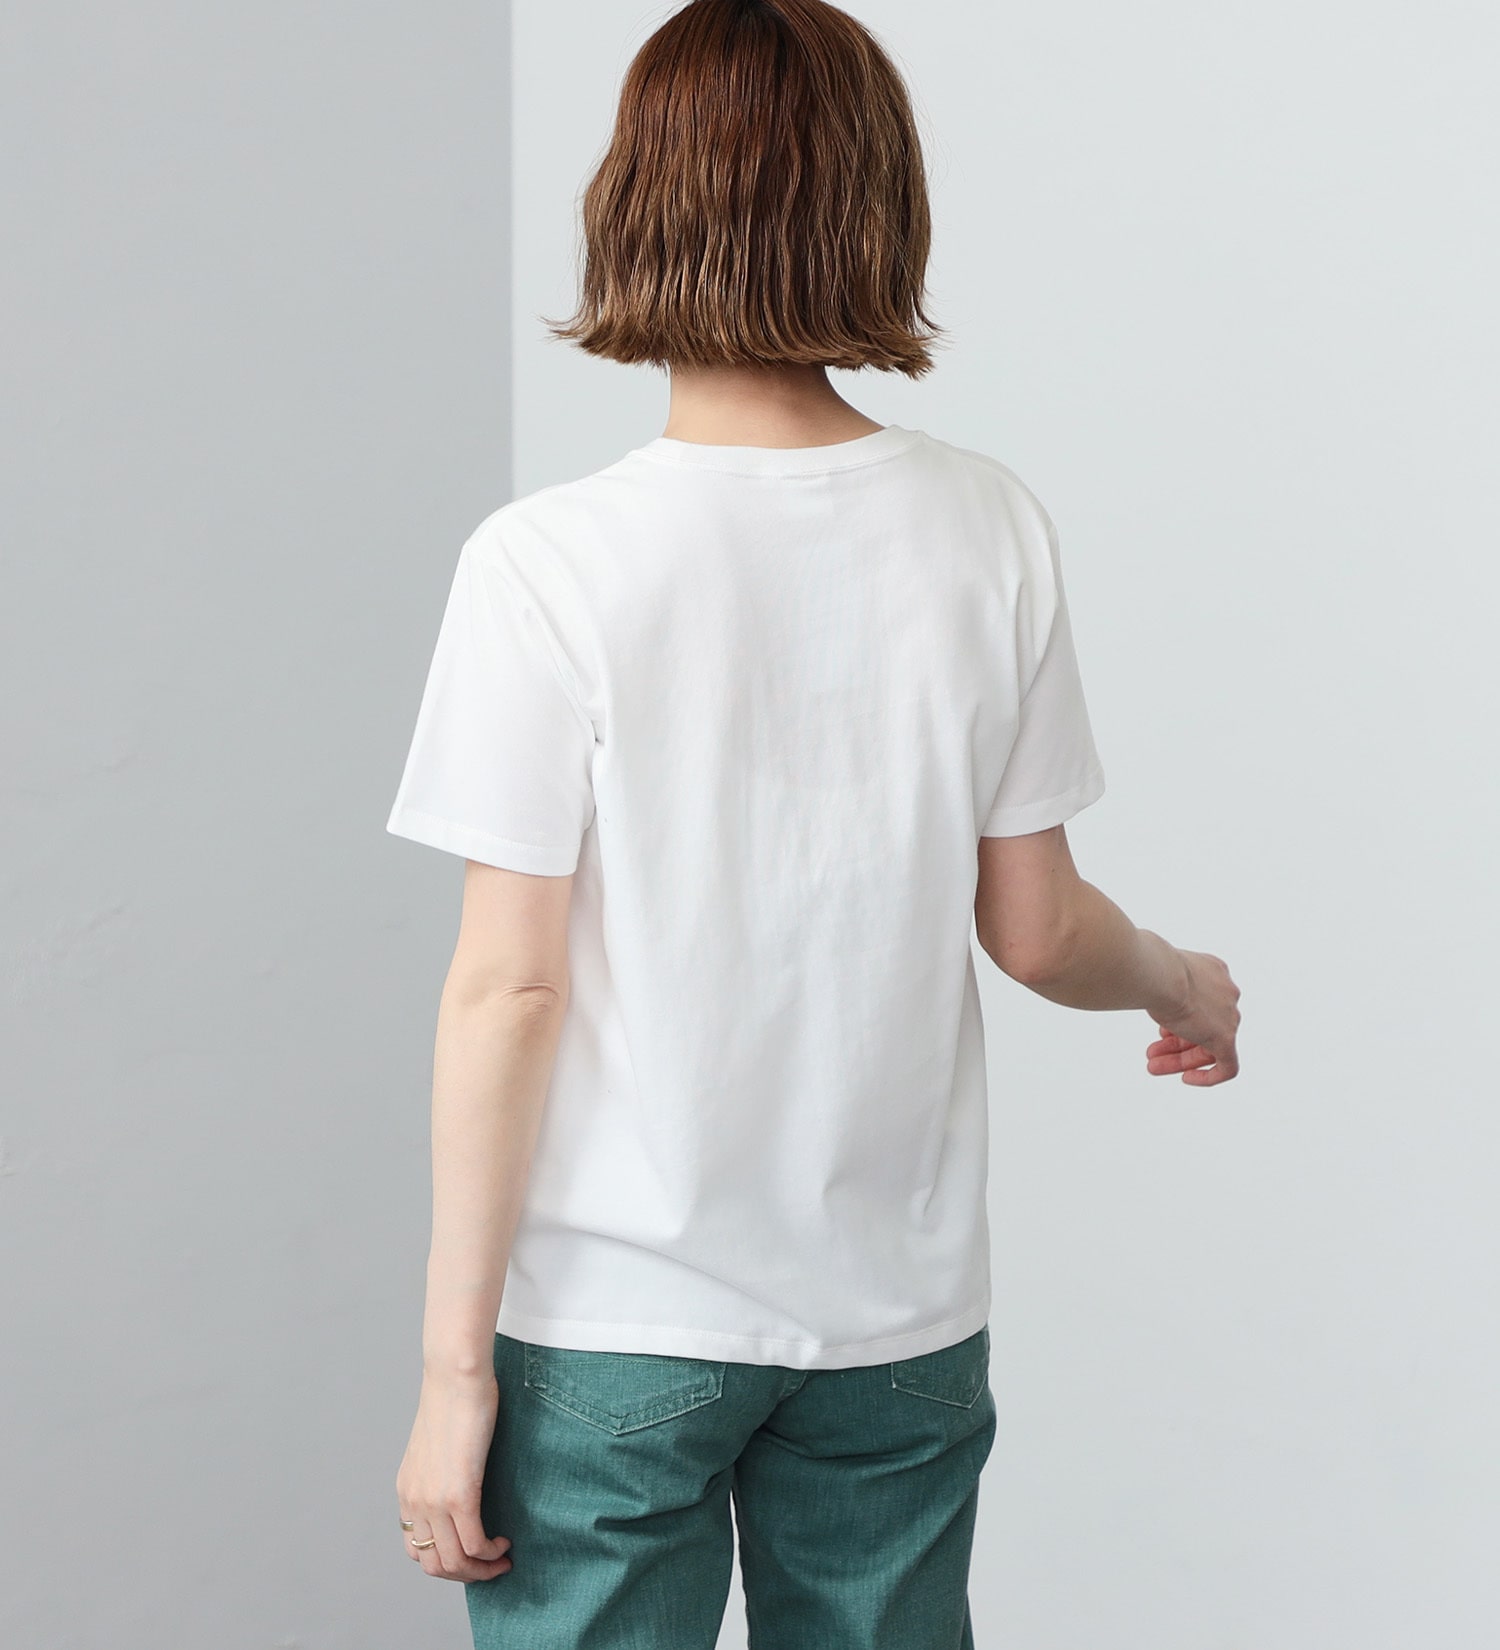 SOMETHING(サムシング)のSOMETHING シャイニープリントTシャツ【半袖】|トップス/Tシャツ/カットソー/レディース|ホワイト